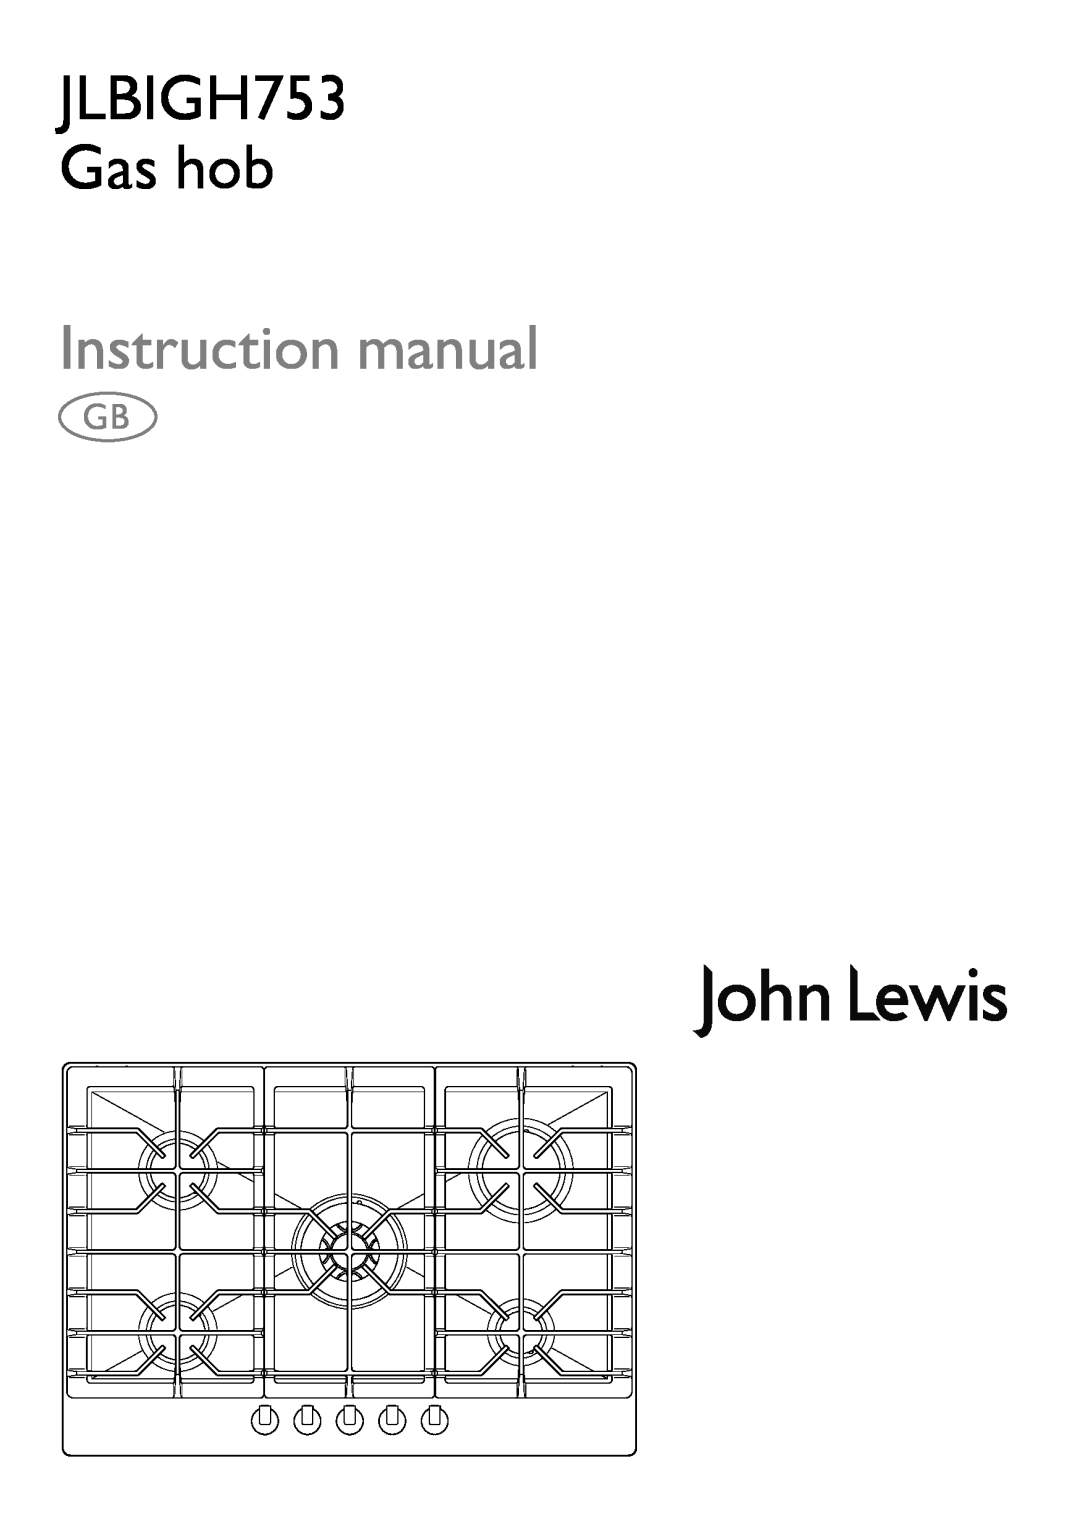 John Lewis instruction manual JLBIGH753 Gas hob 